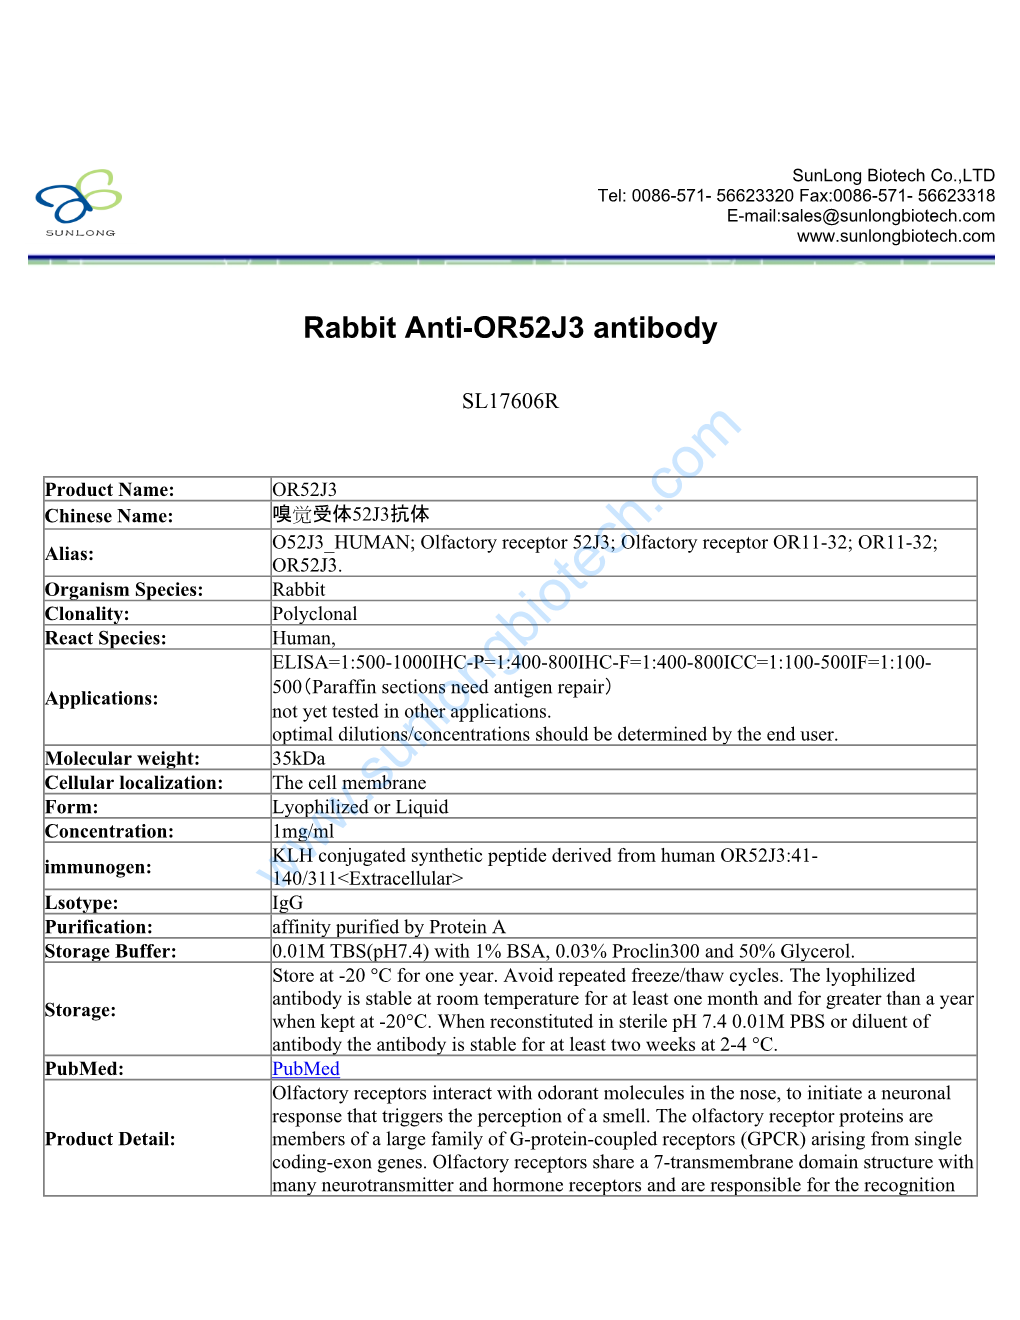 Rabbit Anti-OR52J3 Antibody-SL17606R